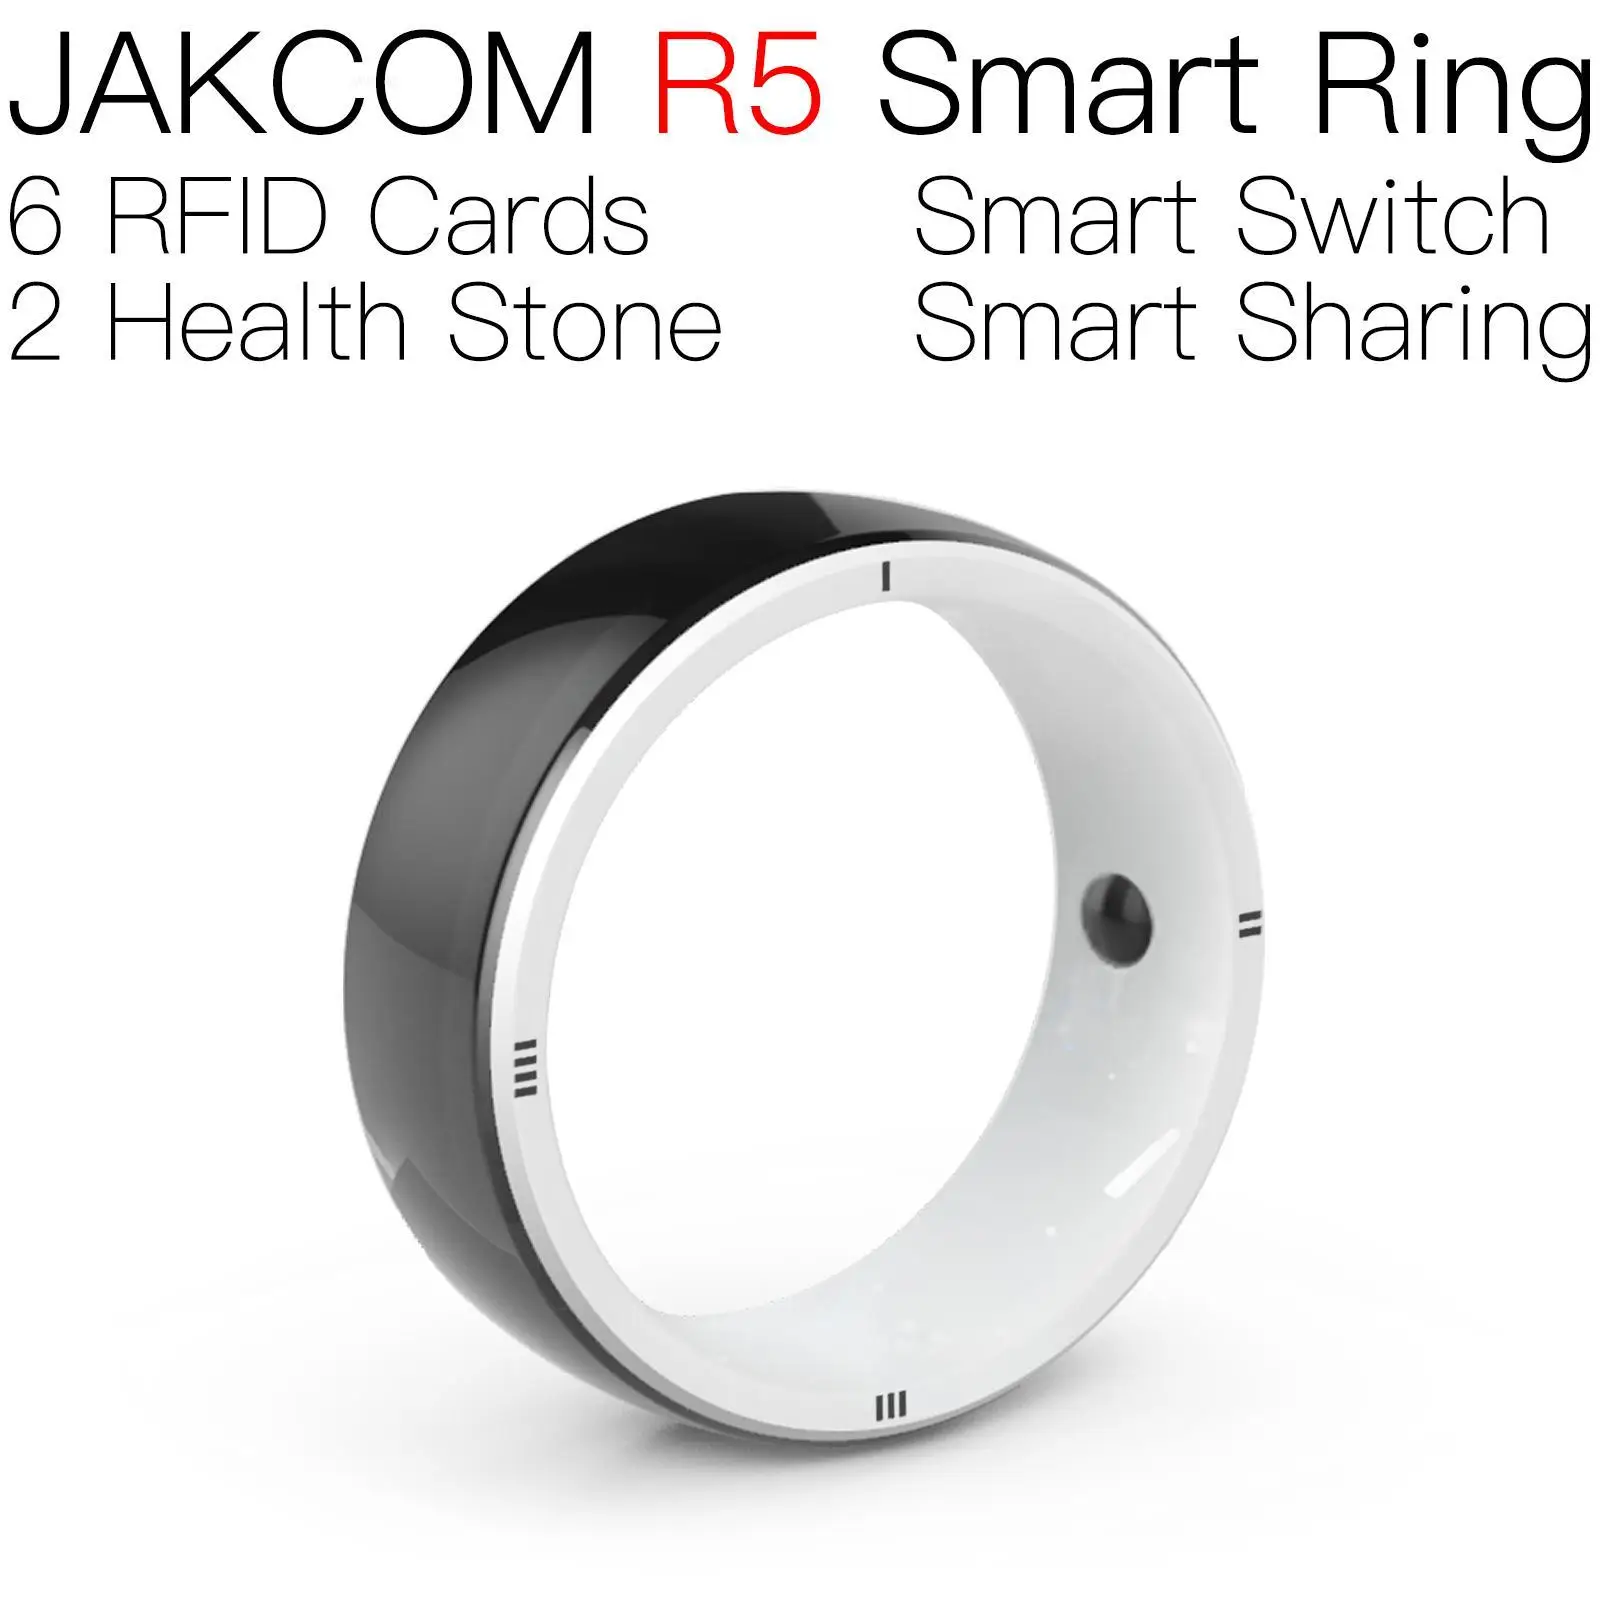 

JAKCOM R5 Smart Ring Super value as carte nfc ntag215 metal 125khz rfid wrist writable blank tag card pvc vip breath of